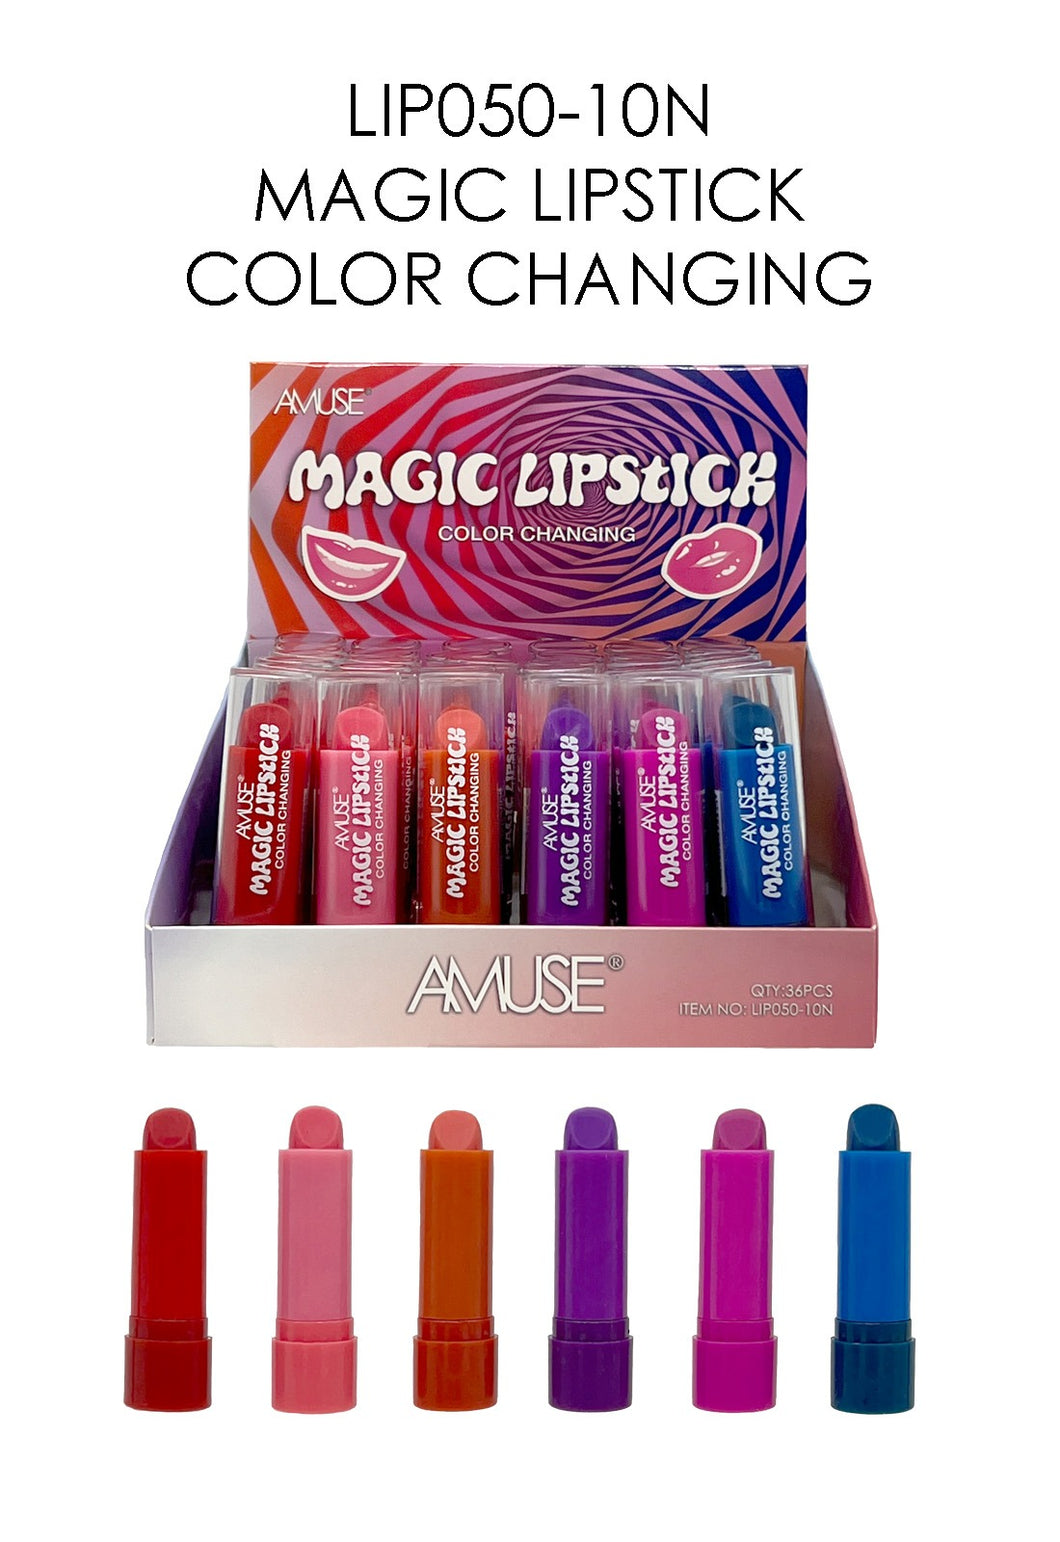 Amuse Magic Lipstick Color Changing Lipstick Display